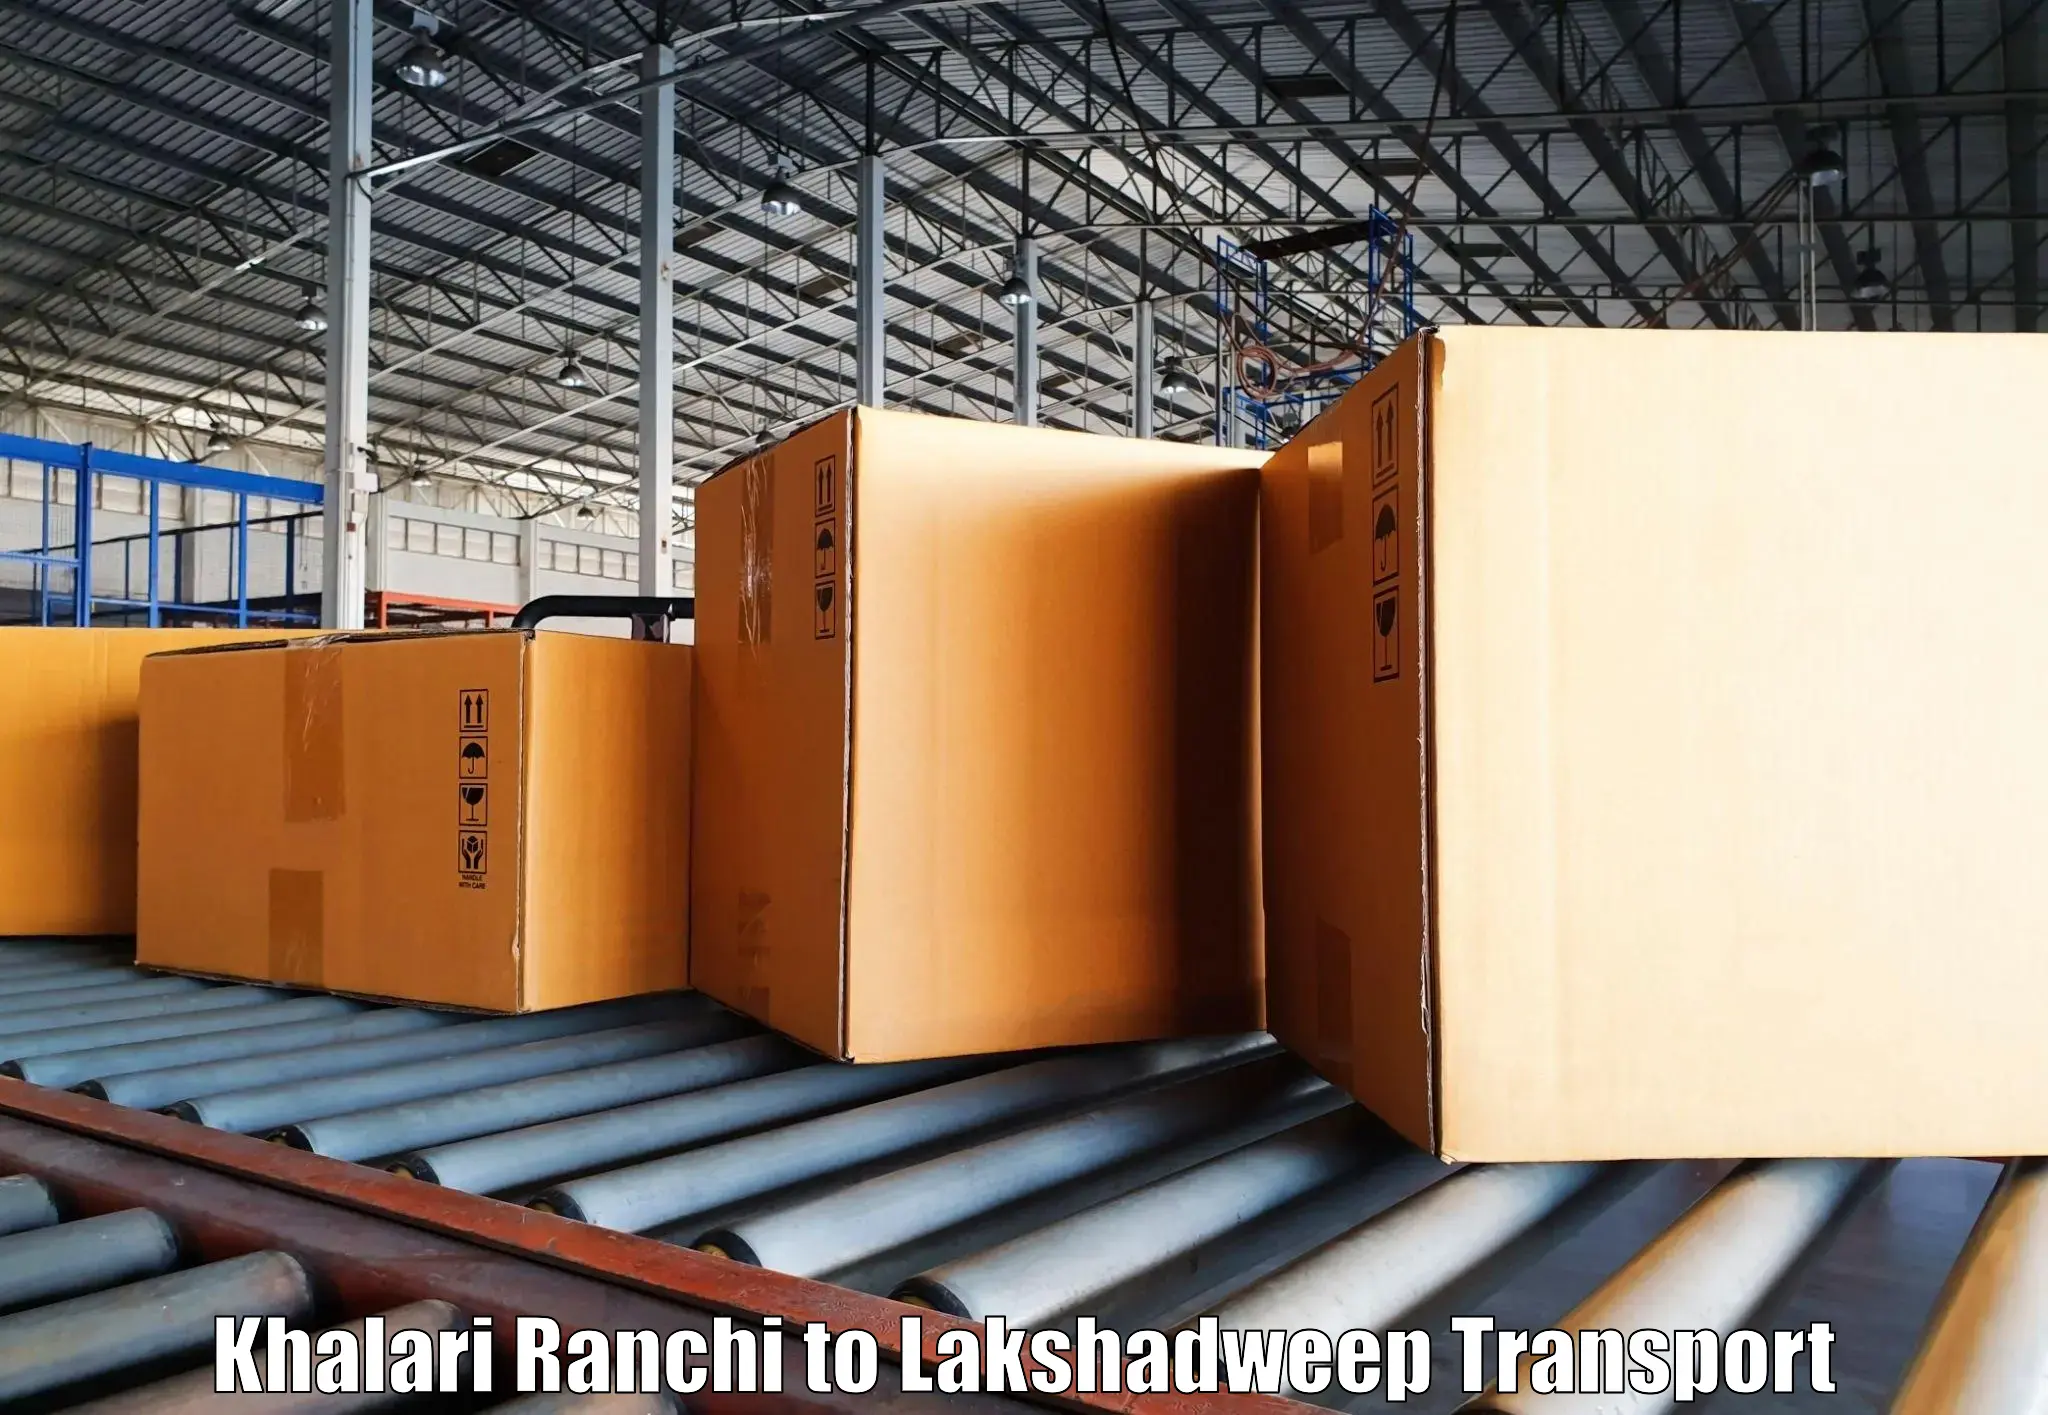 Commercial transport service Khalari Ranchi to Lakshadweep